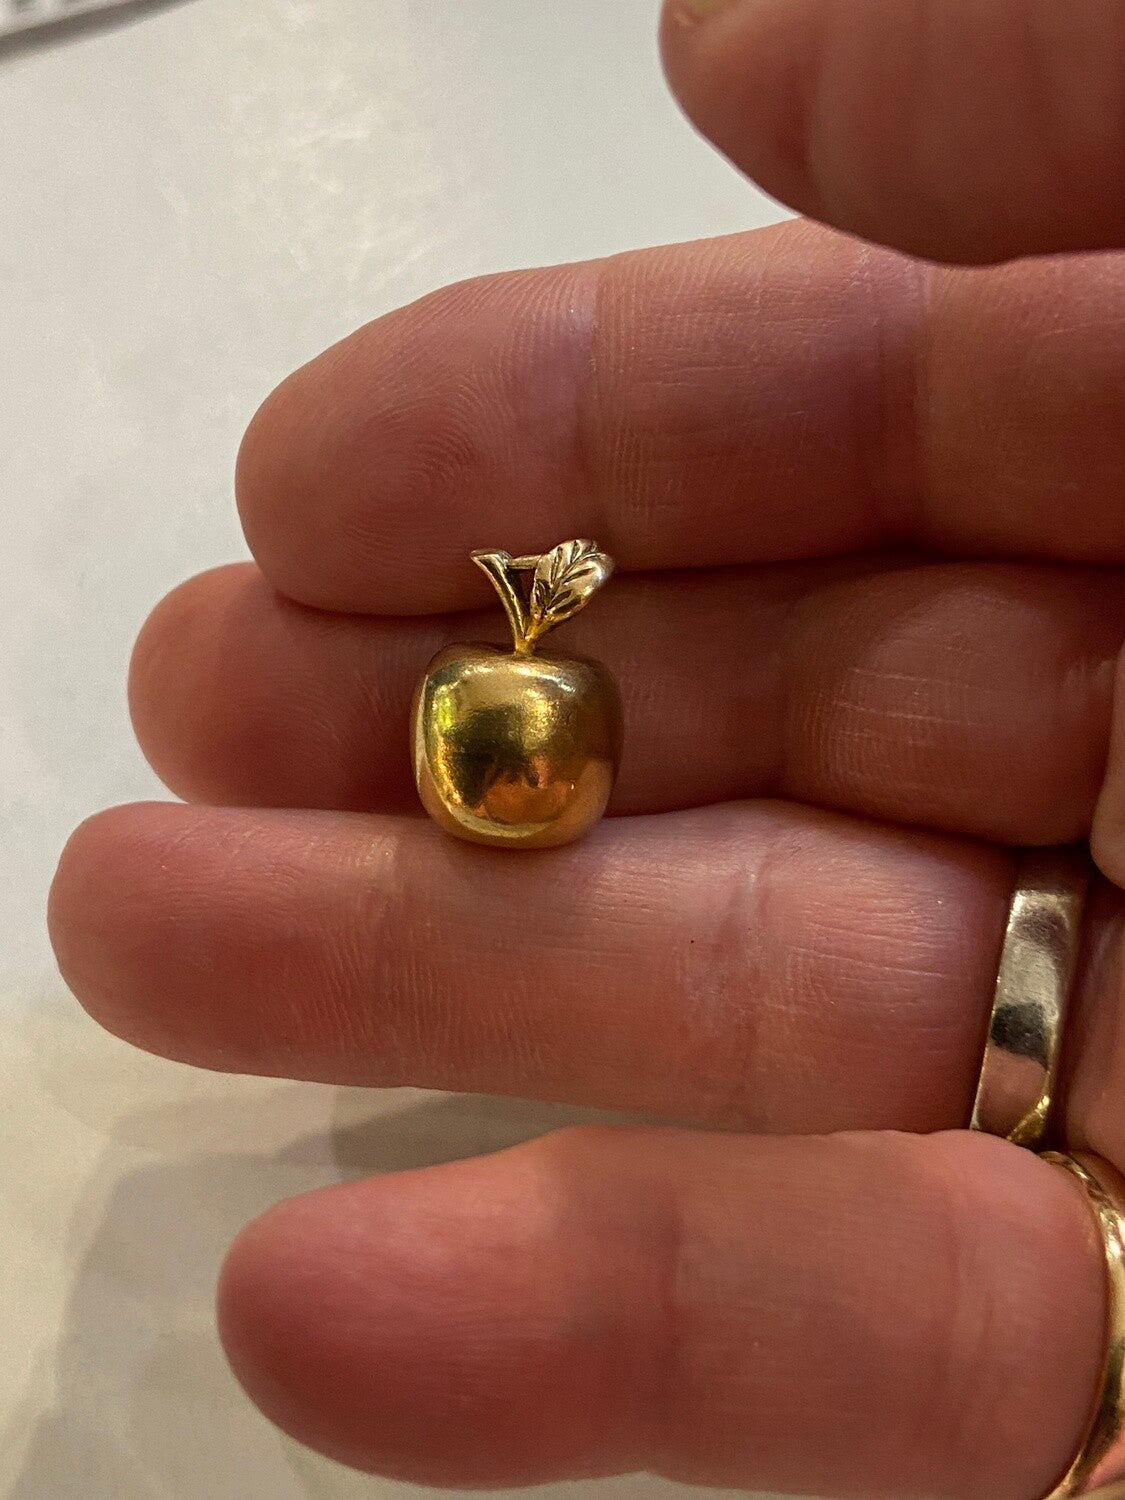 9ct vintage gold hollow apple charm / pendant